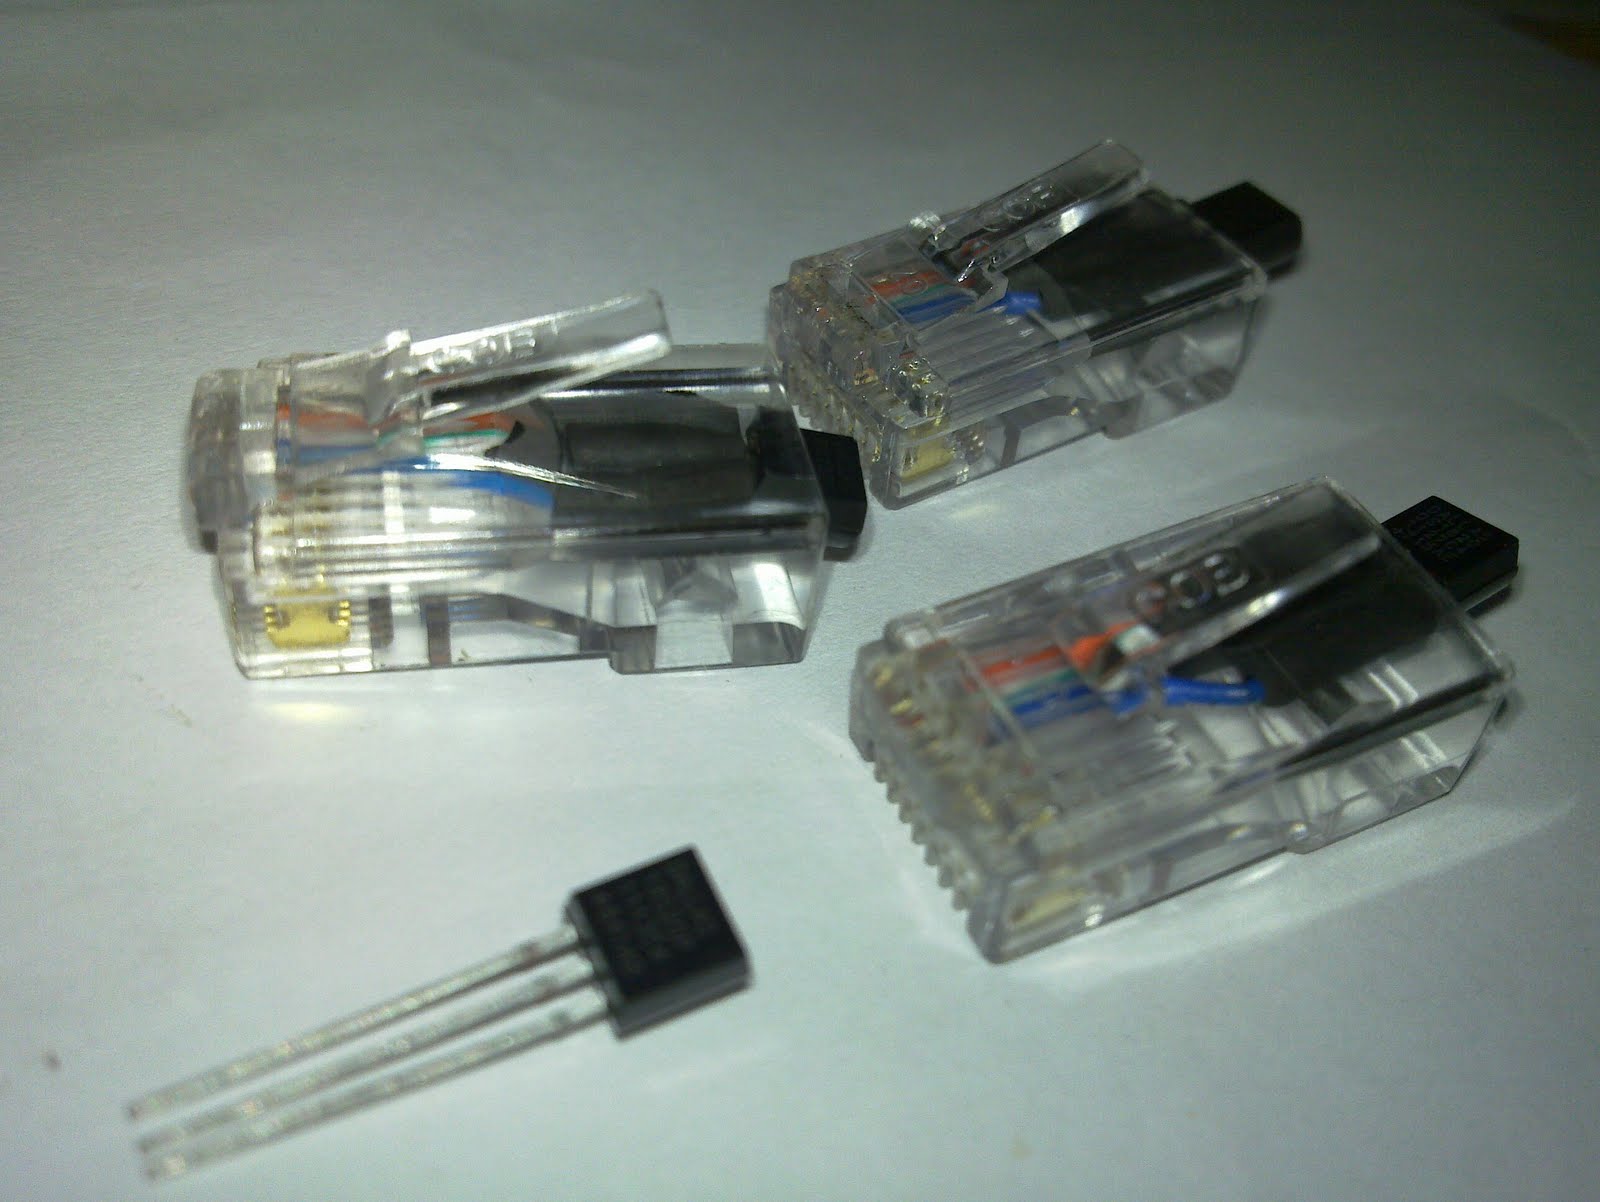 Multiwire Plugs & Connectors arduino